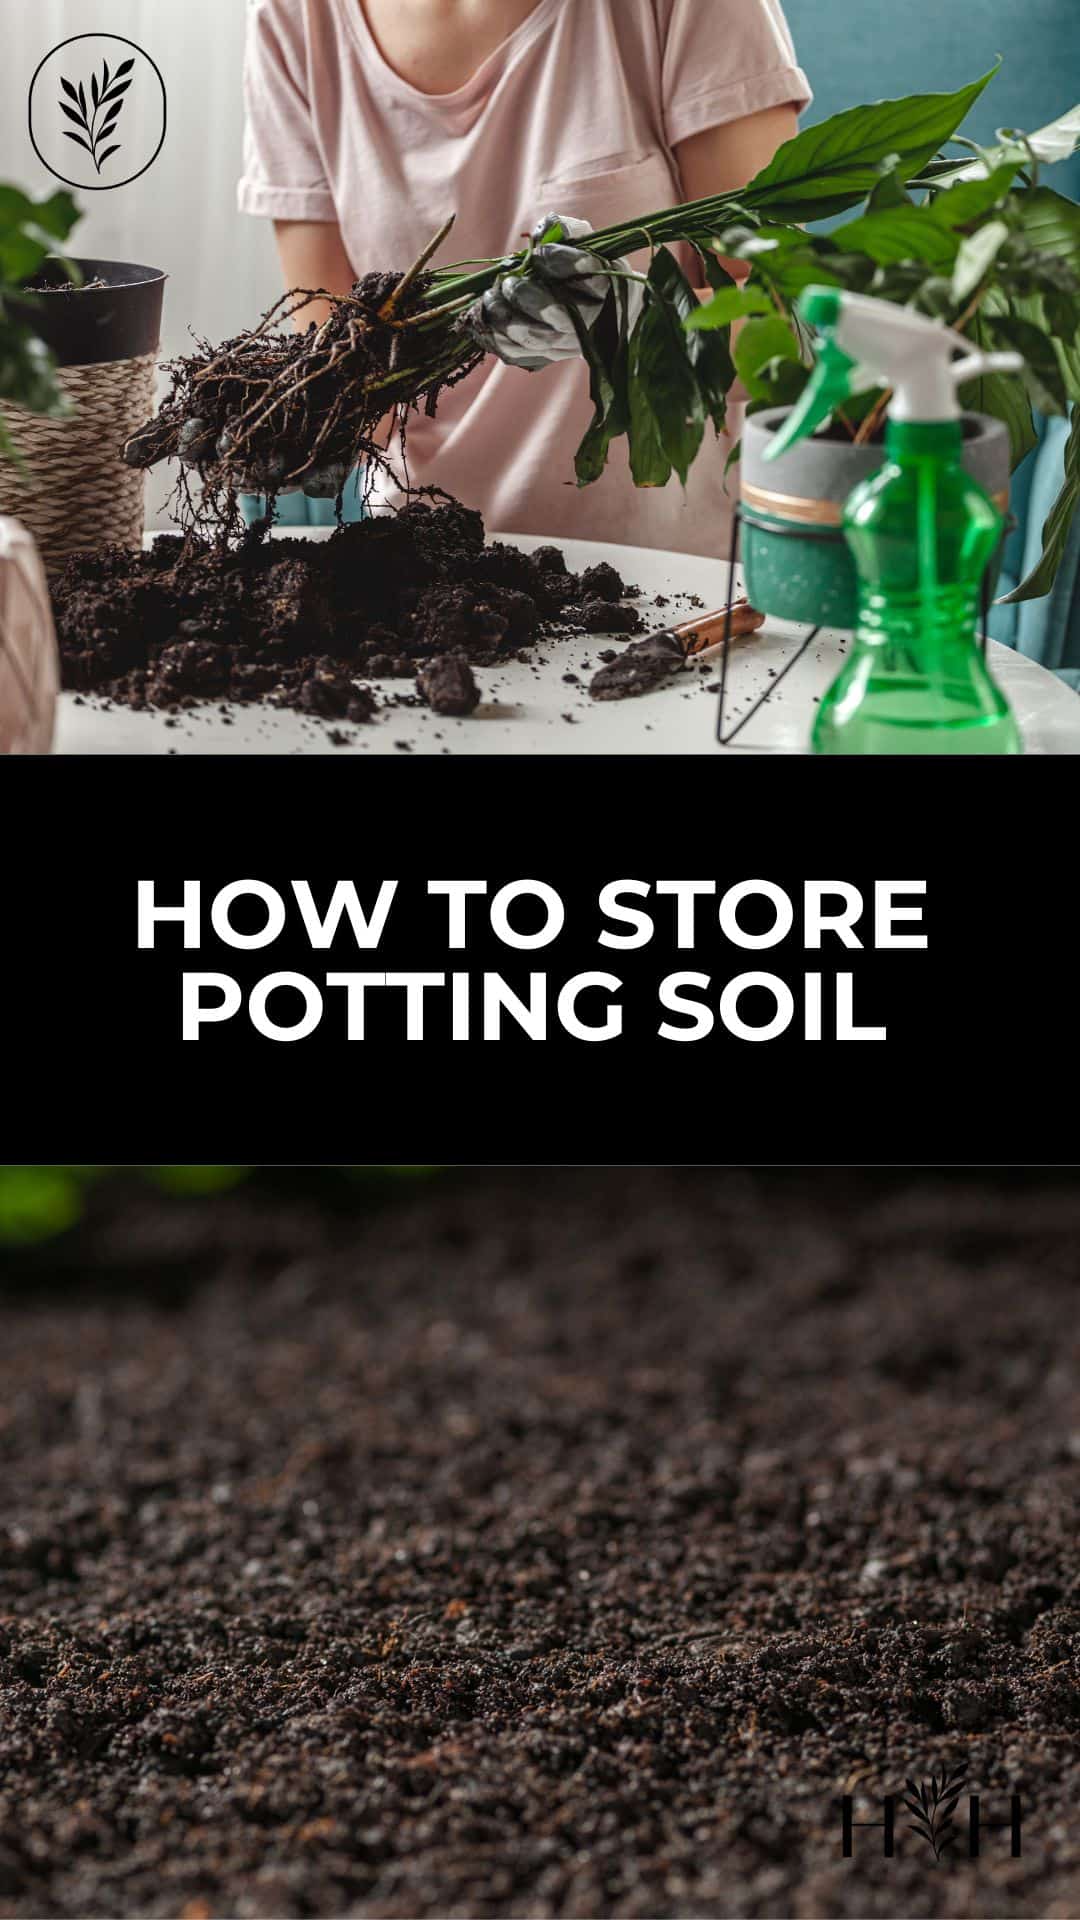 How to store potting soil via @home4theharvest